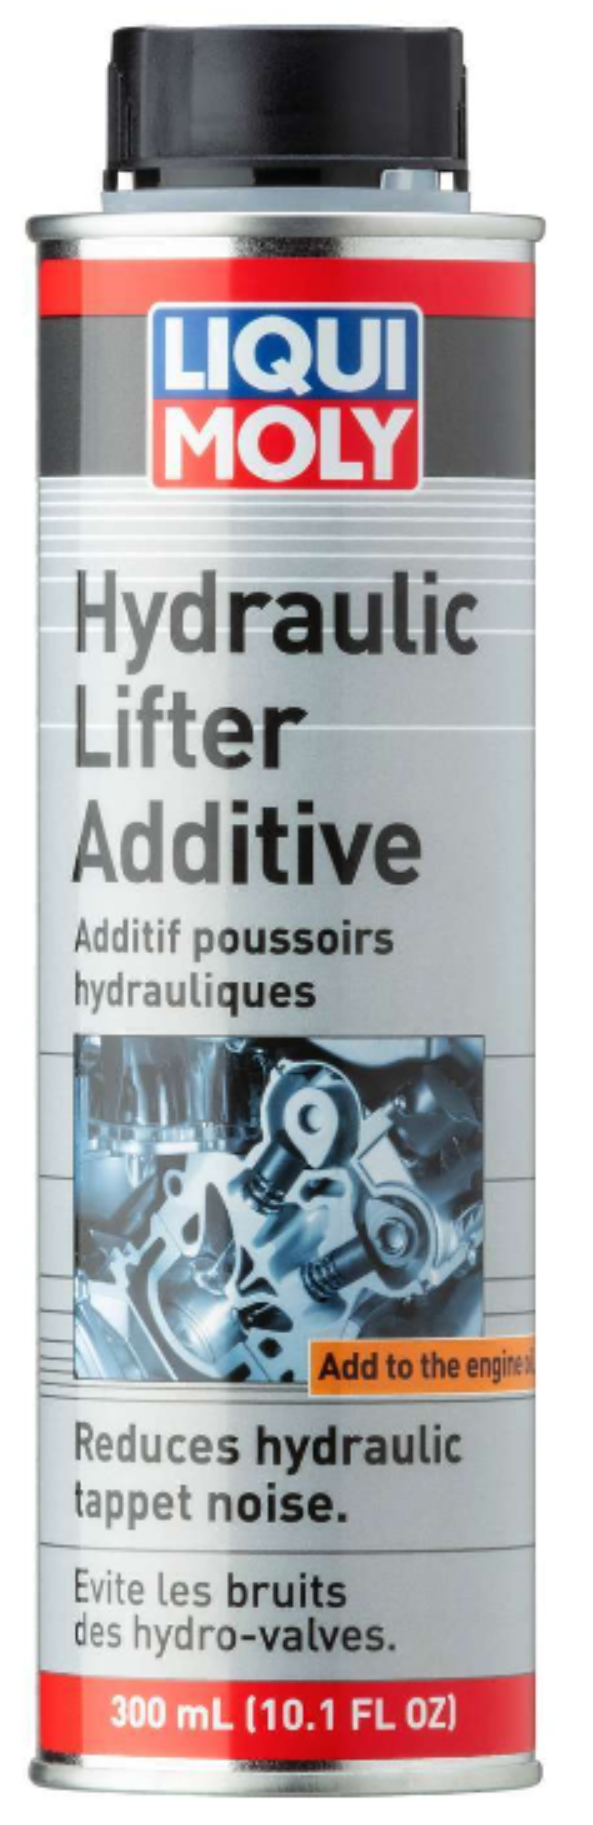 Hydraulic Lifter Additive - Liqui Moly 300ml